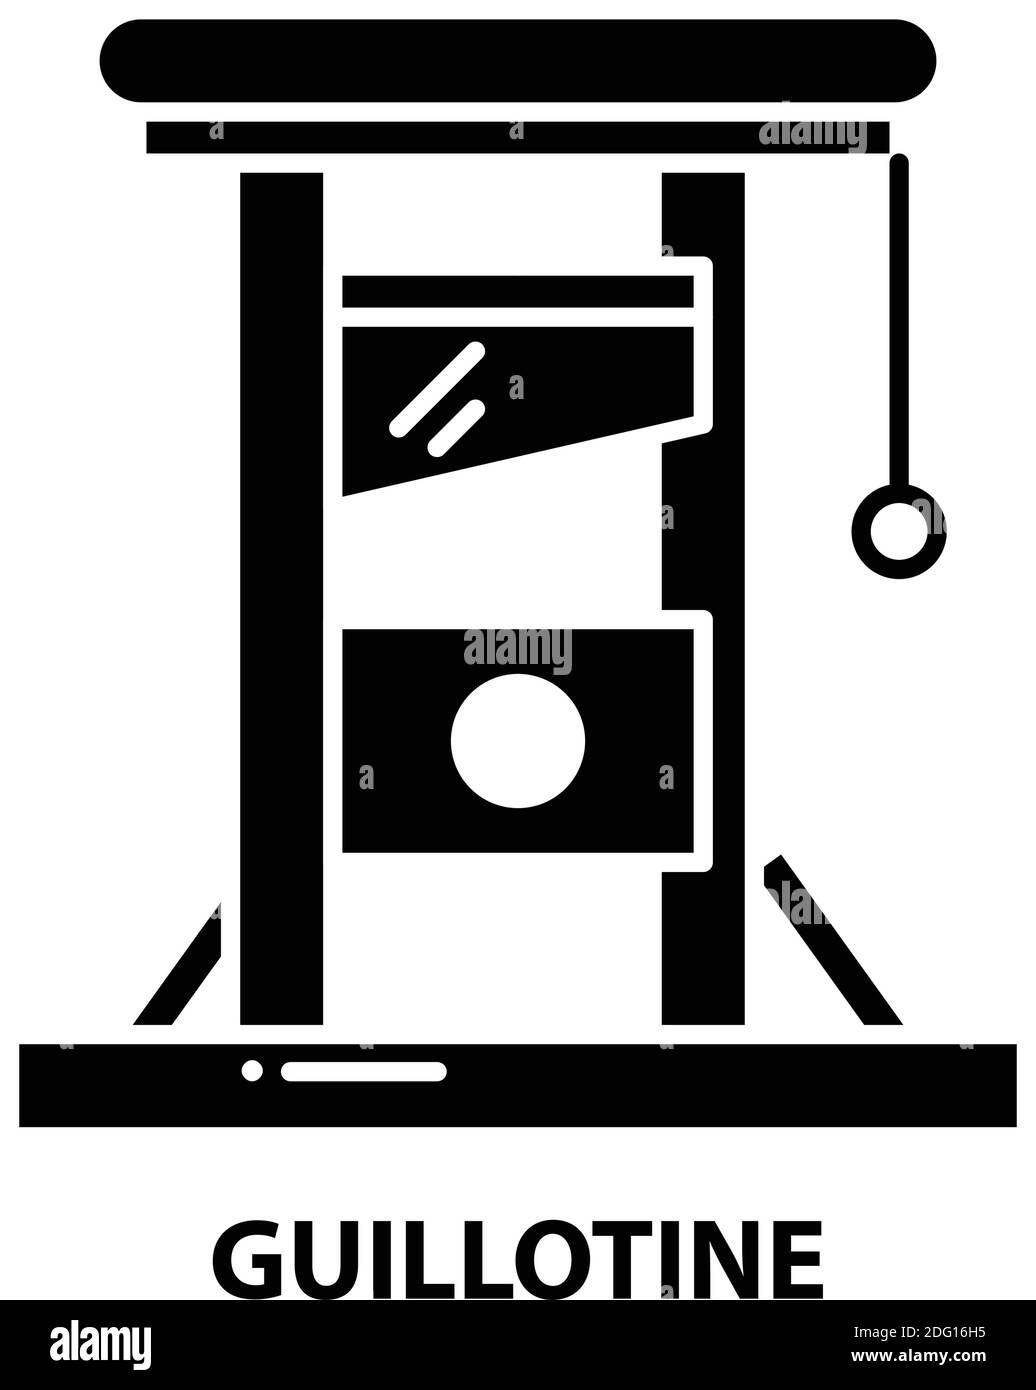 guillotine icon, black vector sign with editable strokes, concept illustration Stock Vector